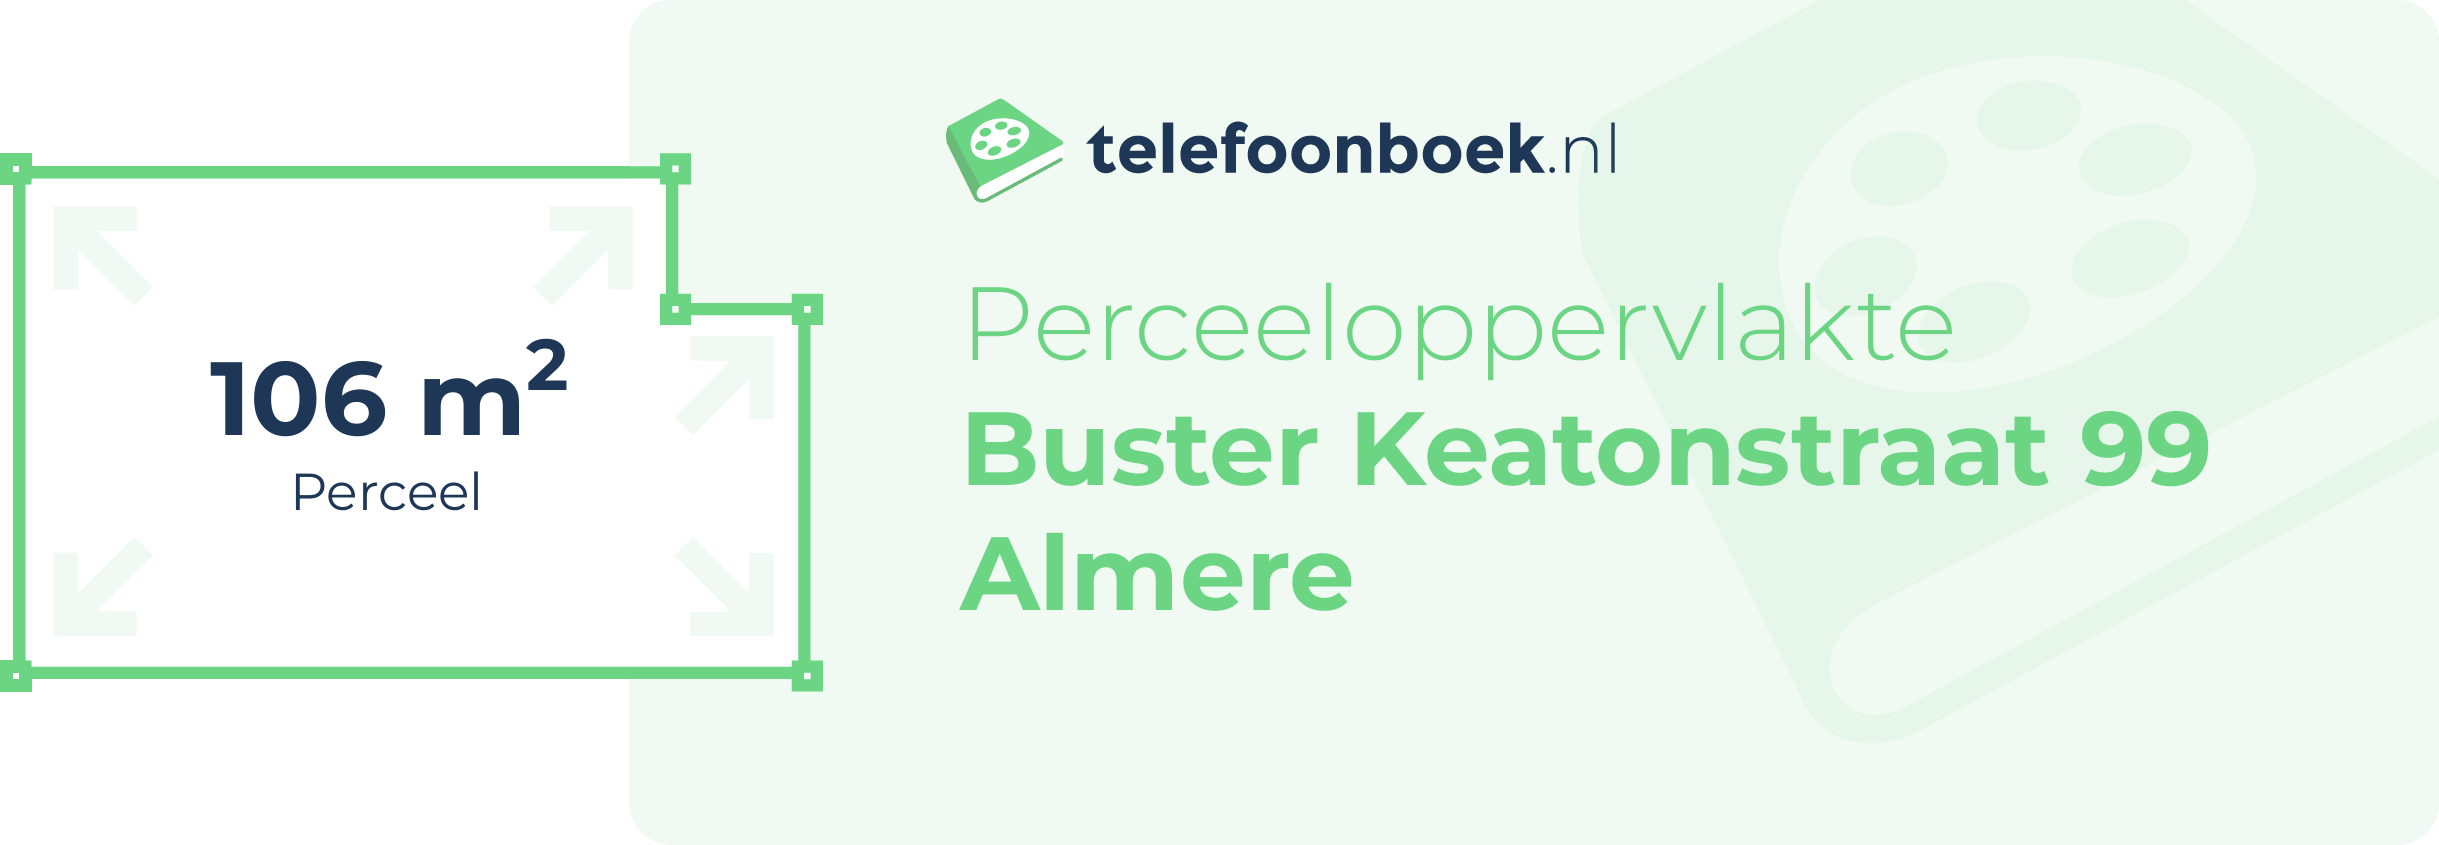 Perceeloppervlakte Buster Keatonstraat 99 Almere